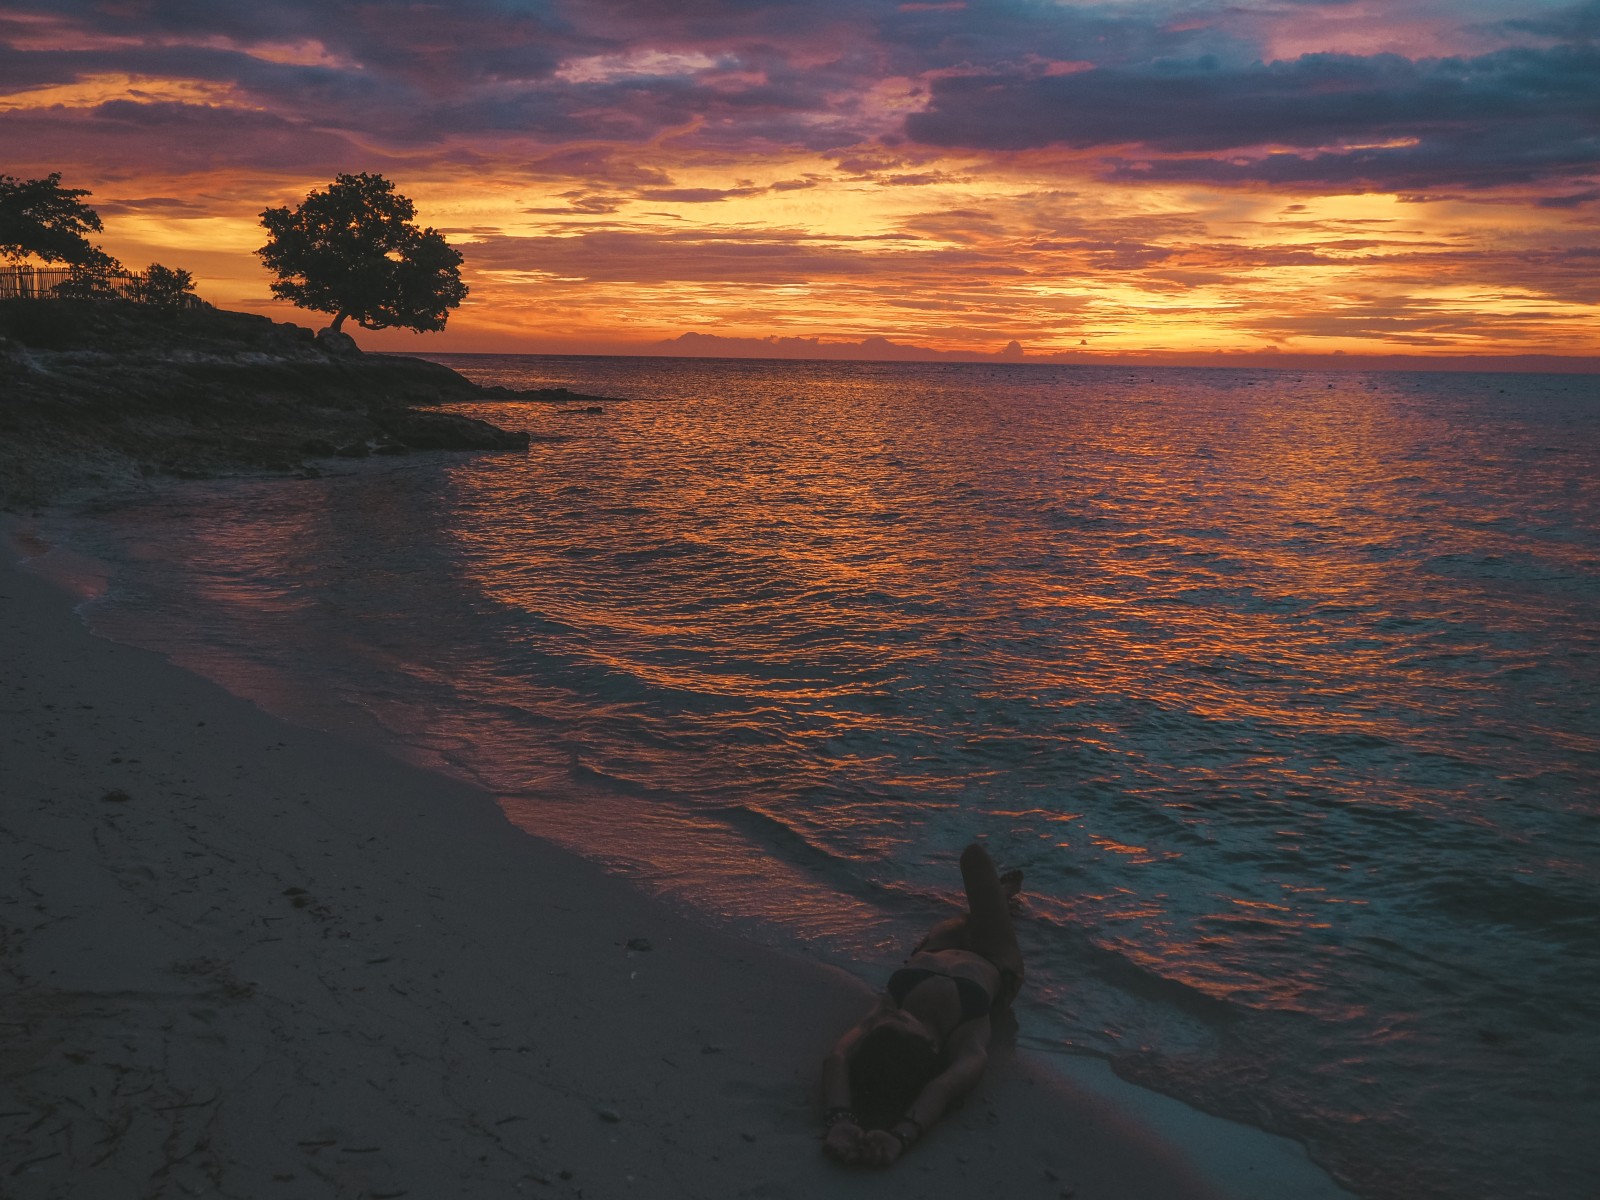 Sunset on Pamilacan island